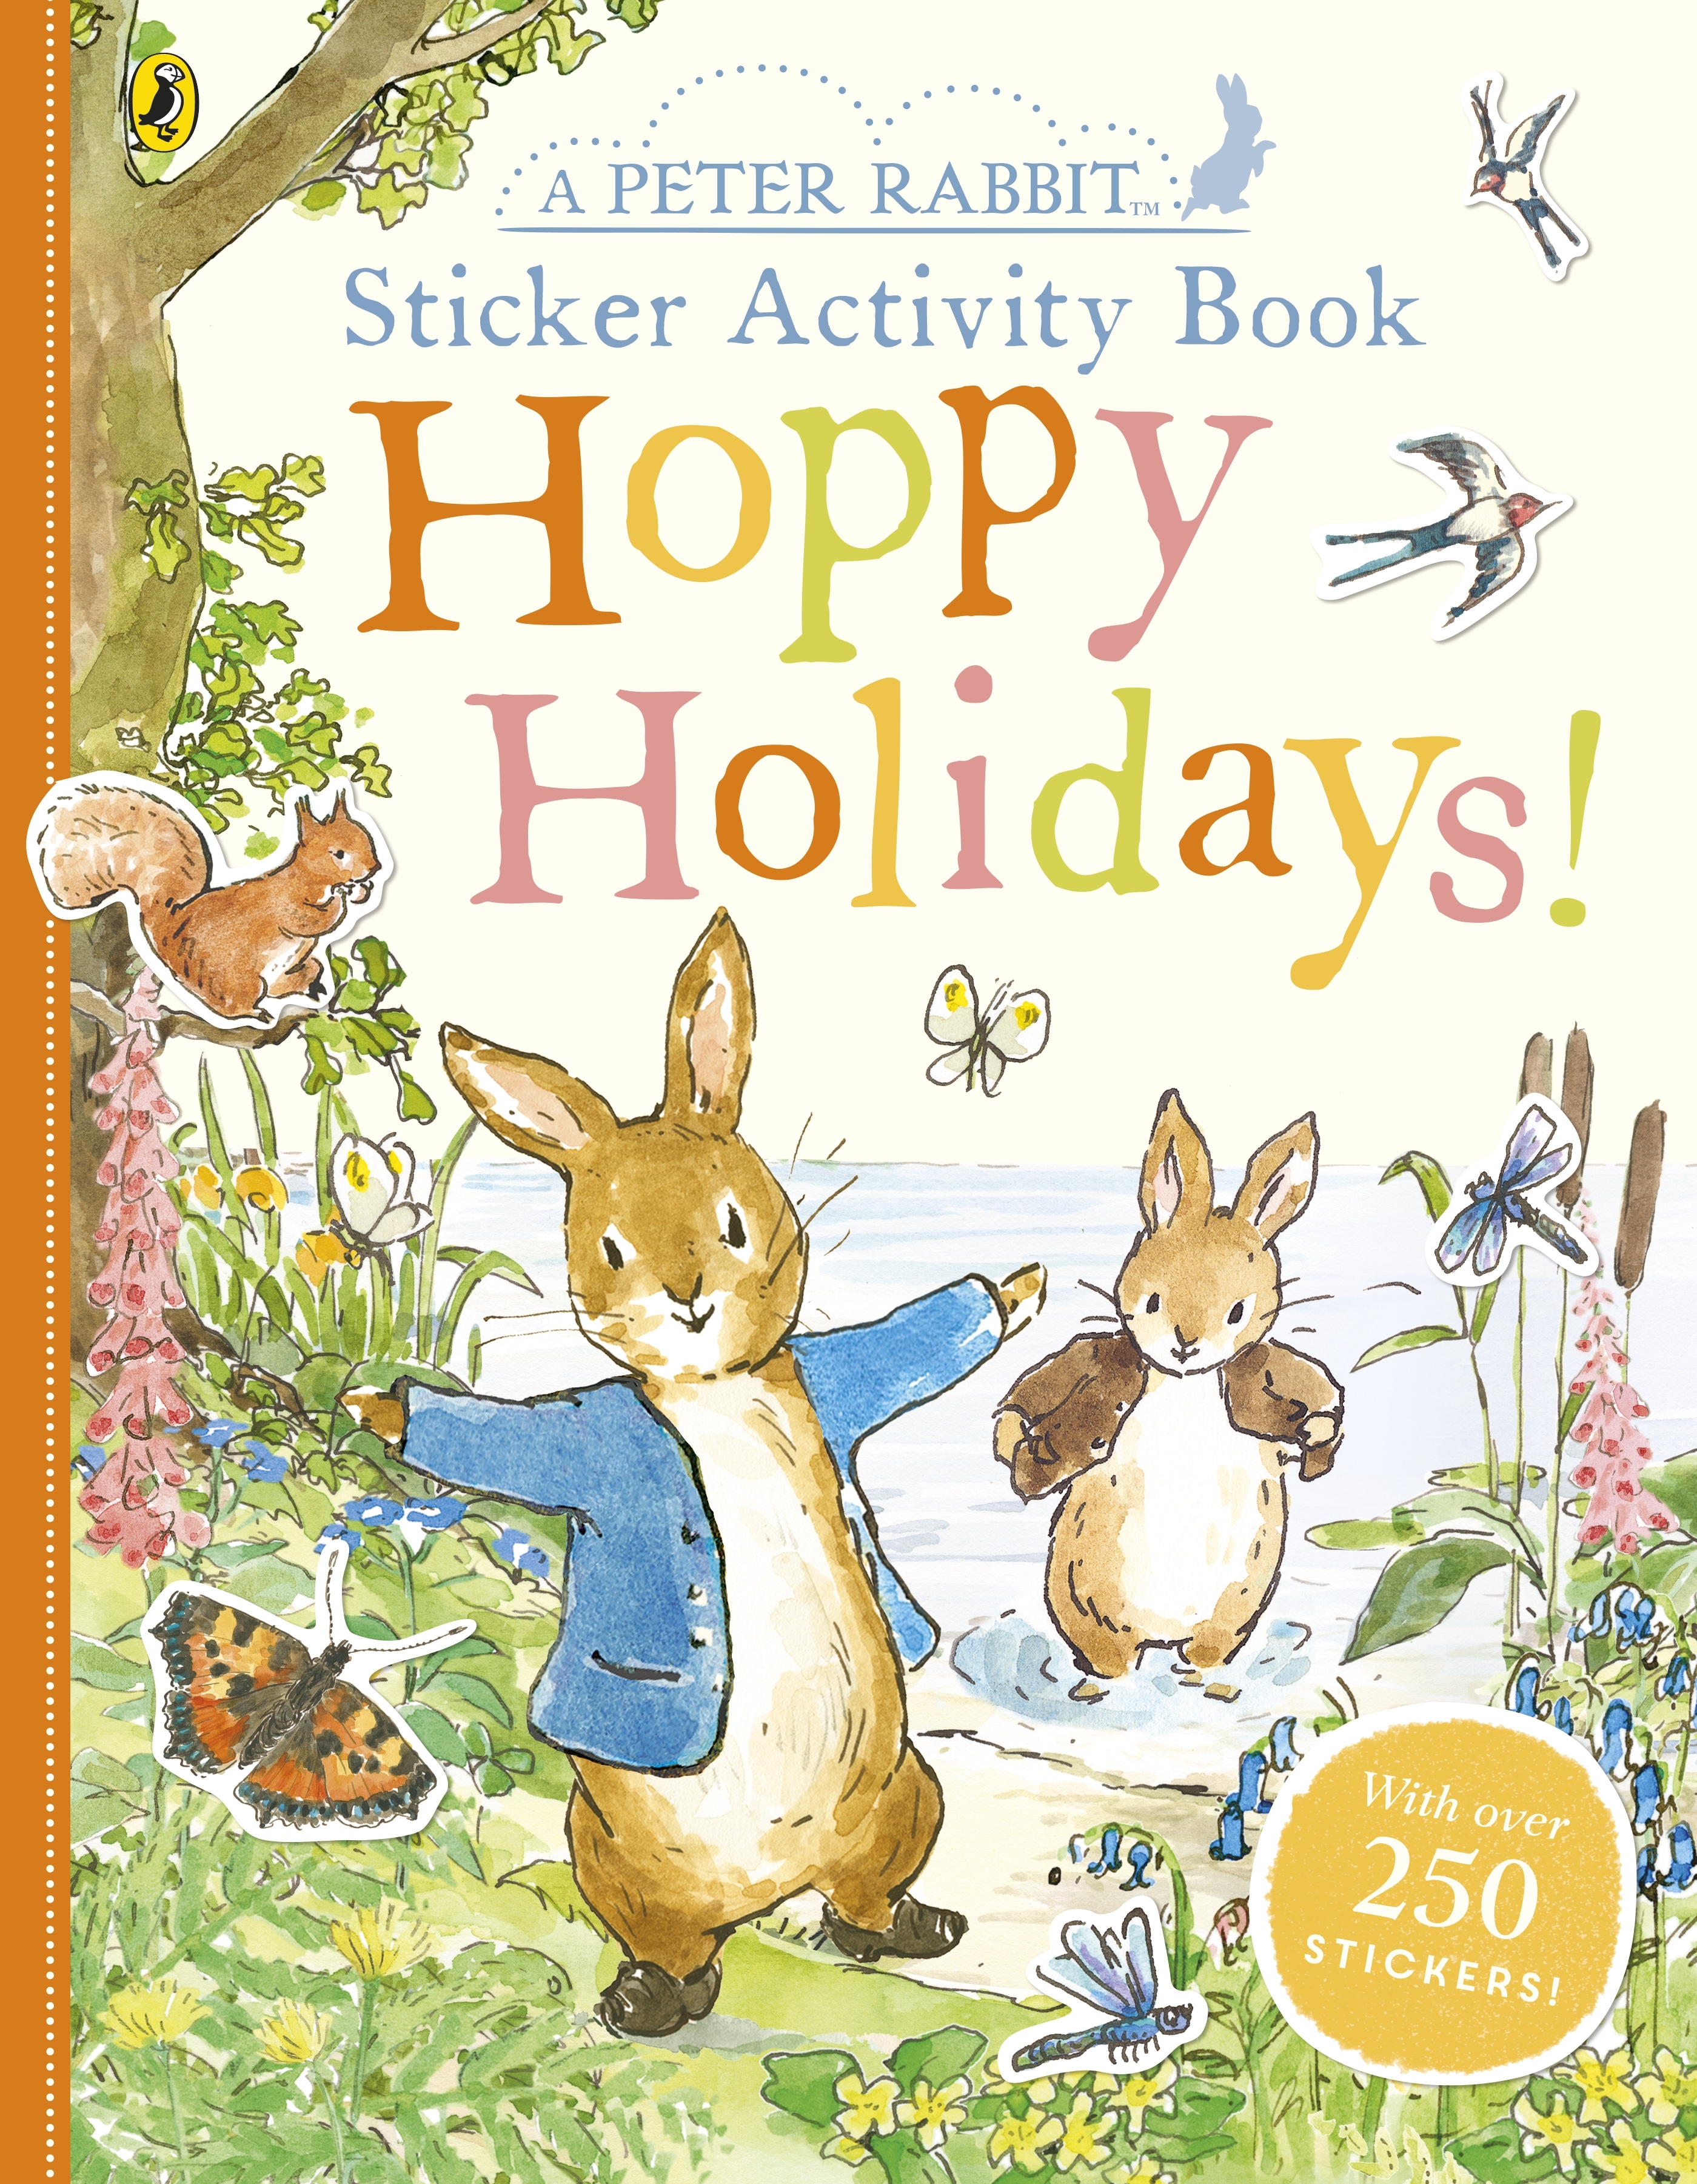 Book “Peter Rabbit Hoppy Holidays Sticker Activity Book” by Beatrix Potter — July 9, 2020